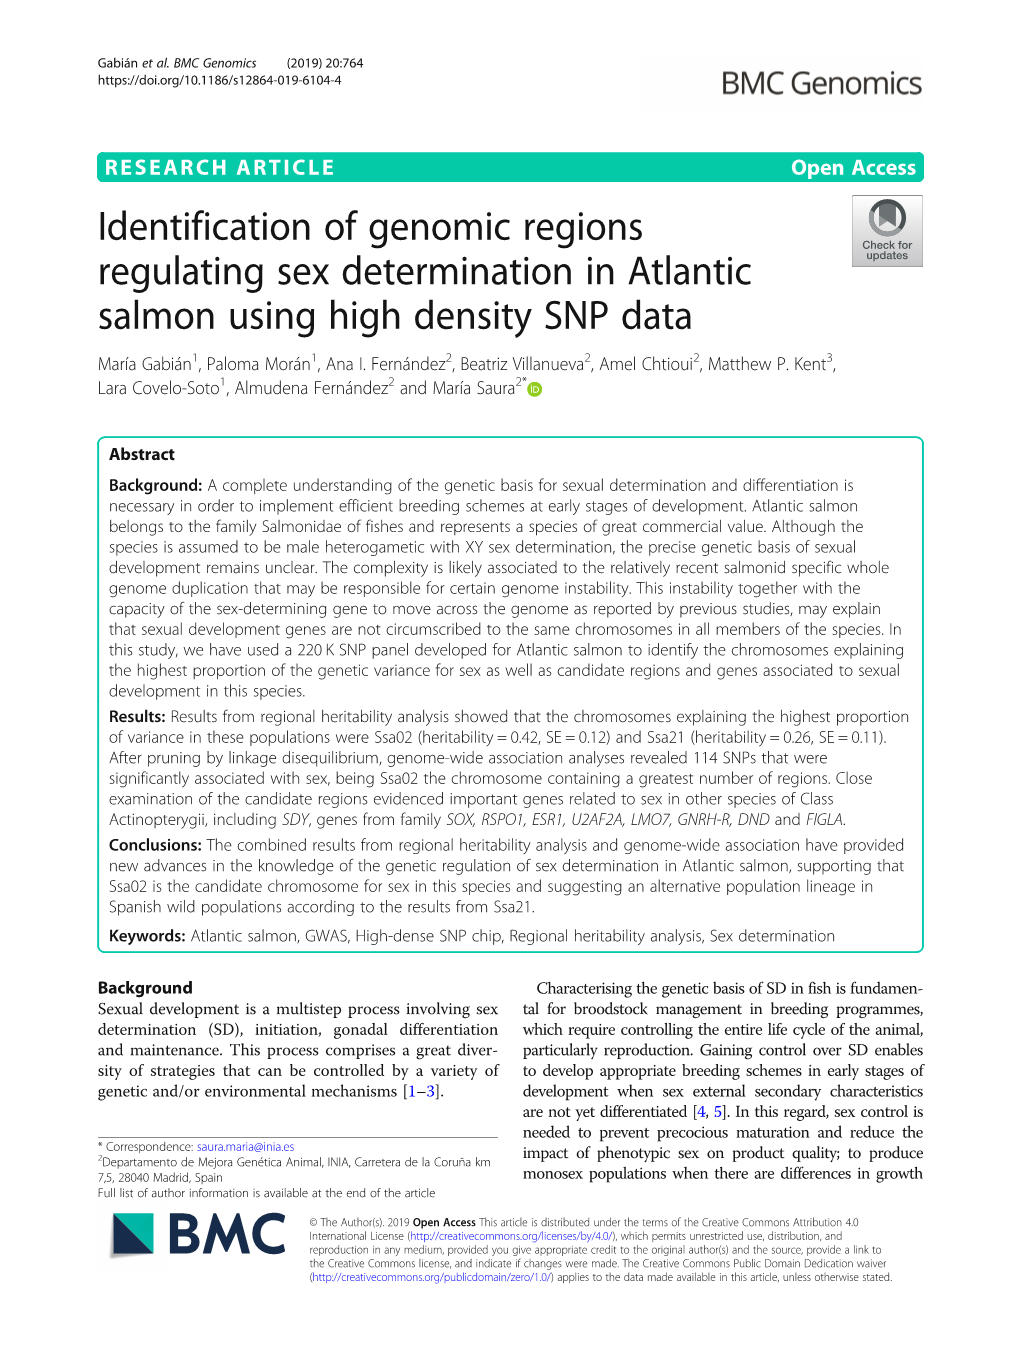 Identification of Genomic Regions Regulating Sex Determination in Atlantic Salmon Using High Density SNP Data María Gabián1, Paloma Morán1, Ana I